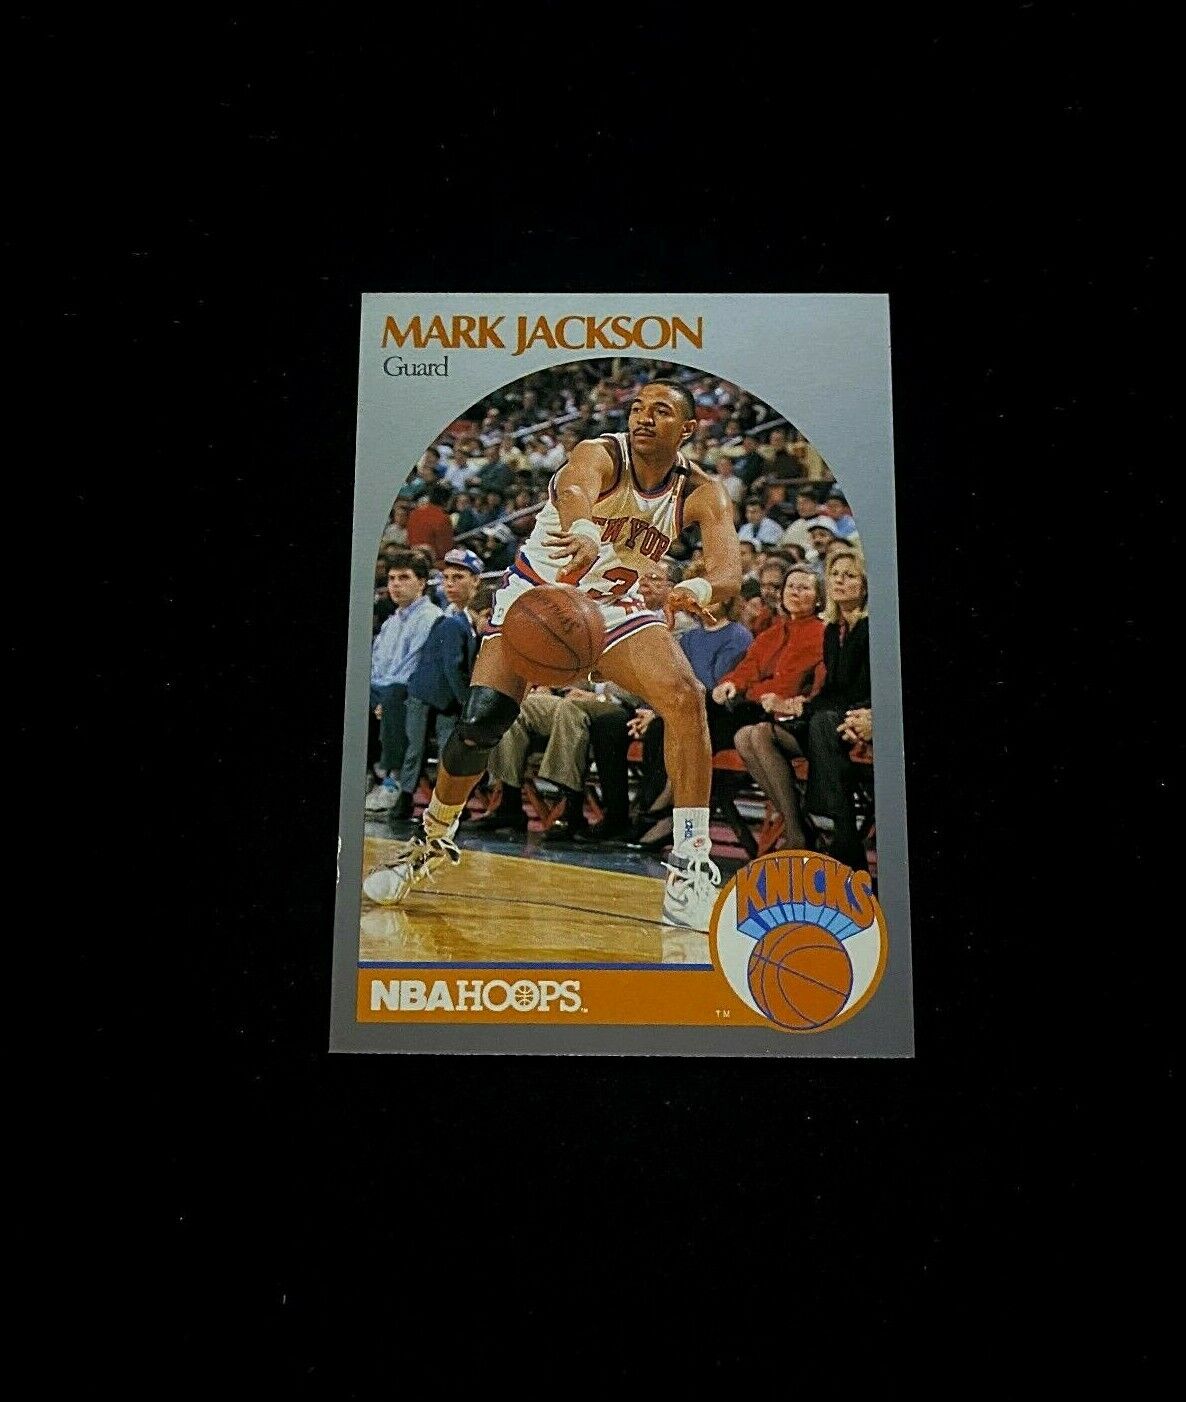 1990 NBA Hoops Mark Jackson Card